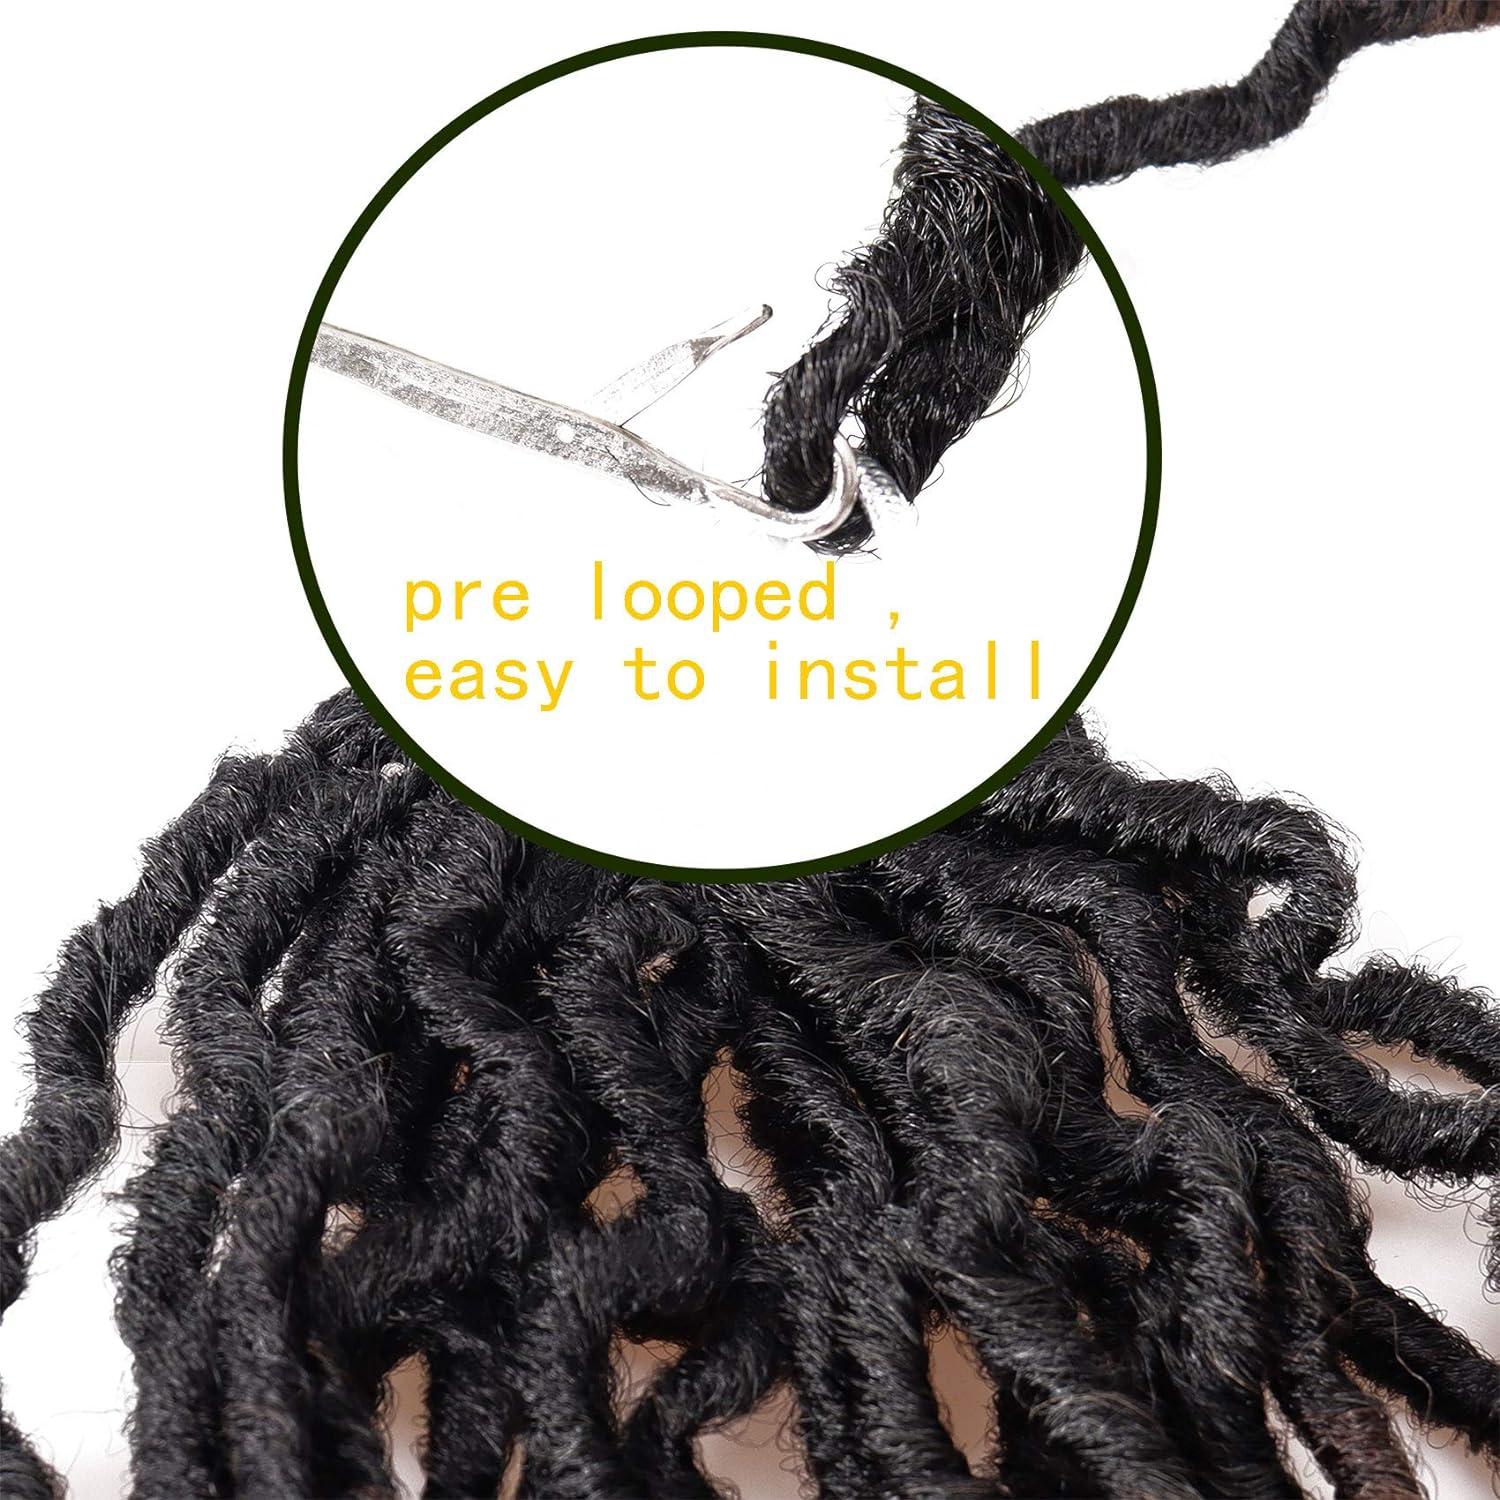 6 Pack Gypsy Locs Crochet Hair 18 Inch Crochet Locs 3 Tone Wavy Goddess  Fauxs Locs Crochet Hair Extensions 1B/30/27